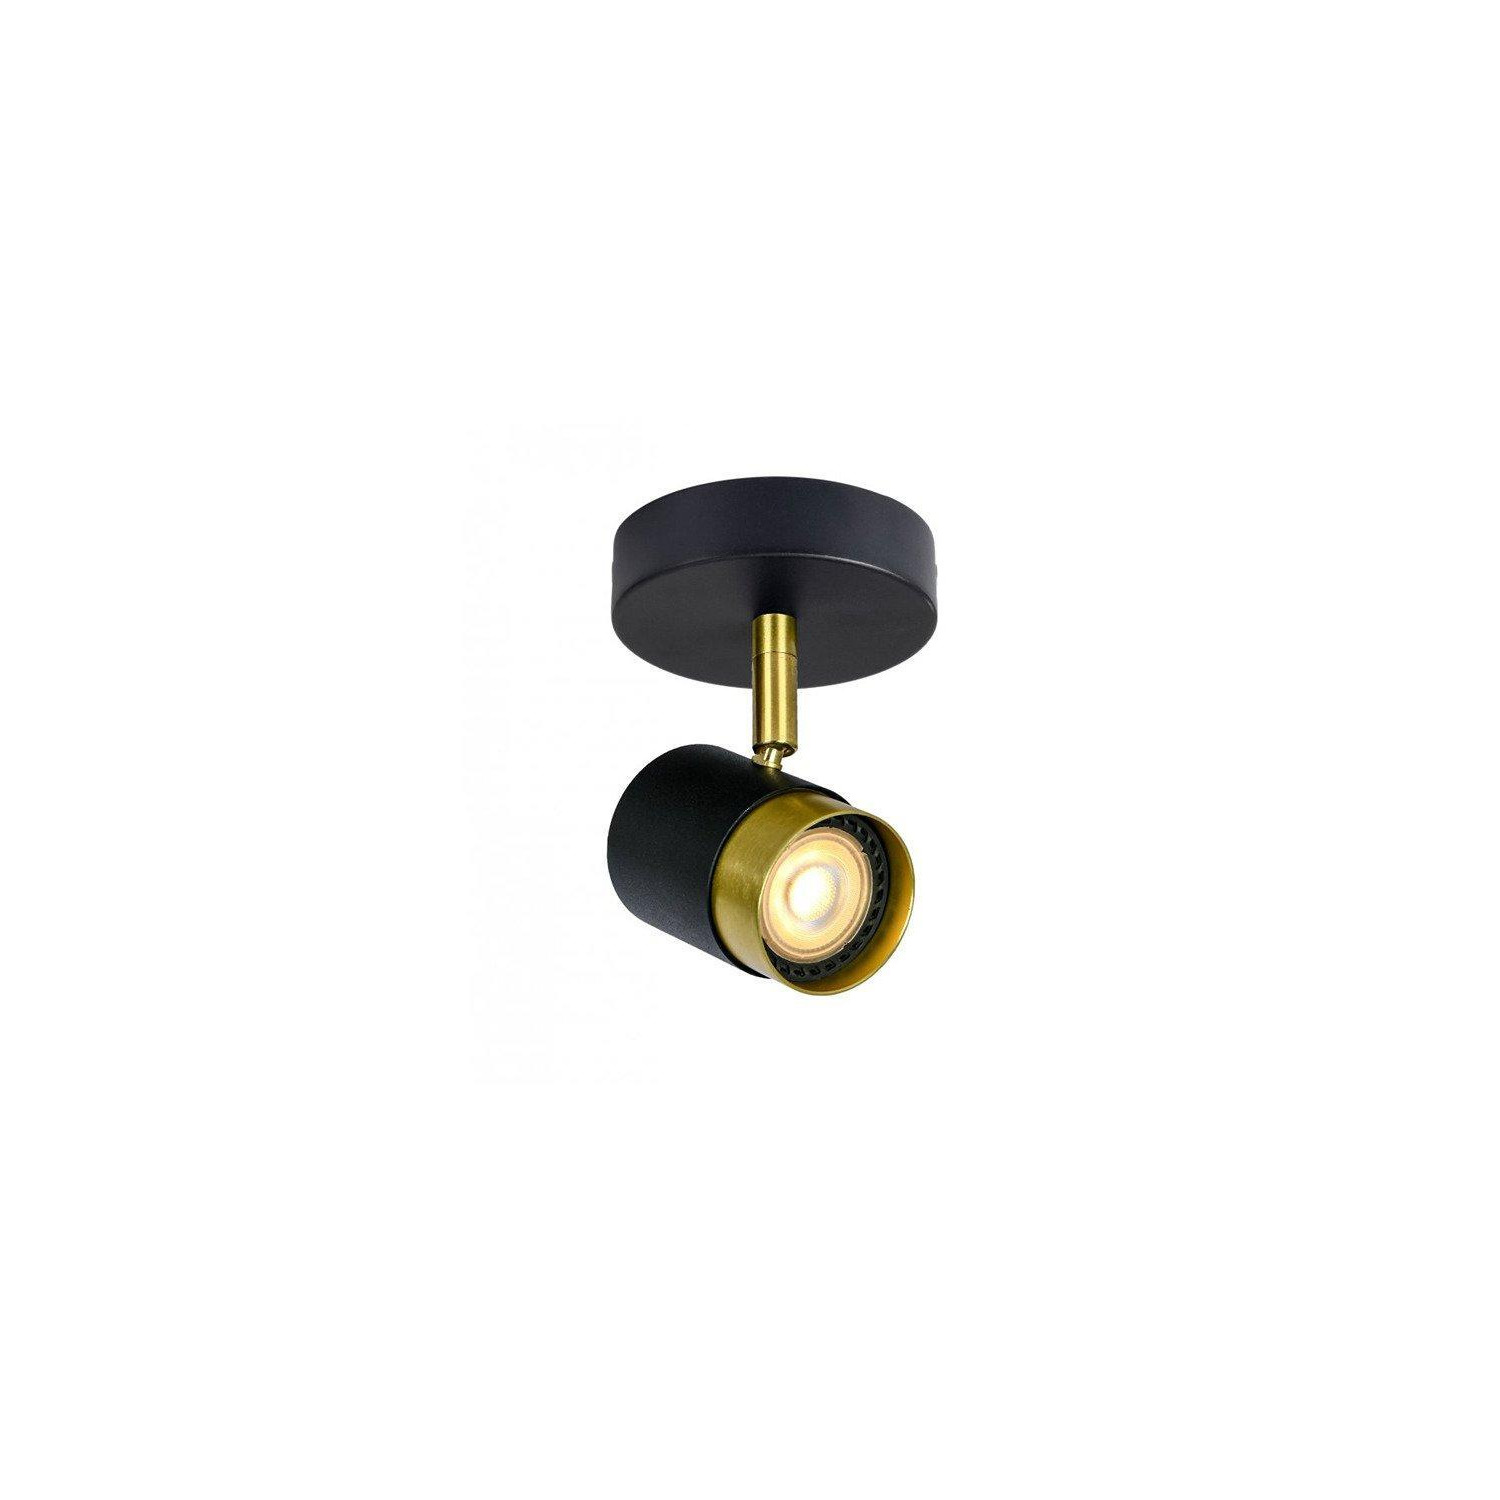 'Orio'  Black and Brushed Gold Single GU10 Adjustable Ceiling Spot Light - image 1